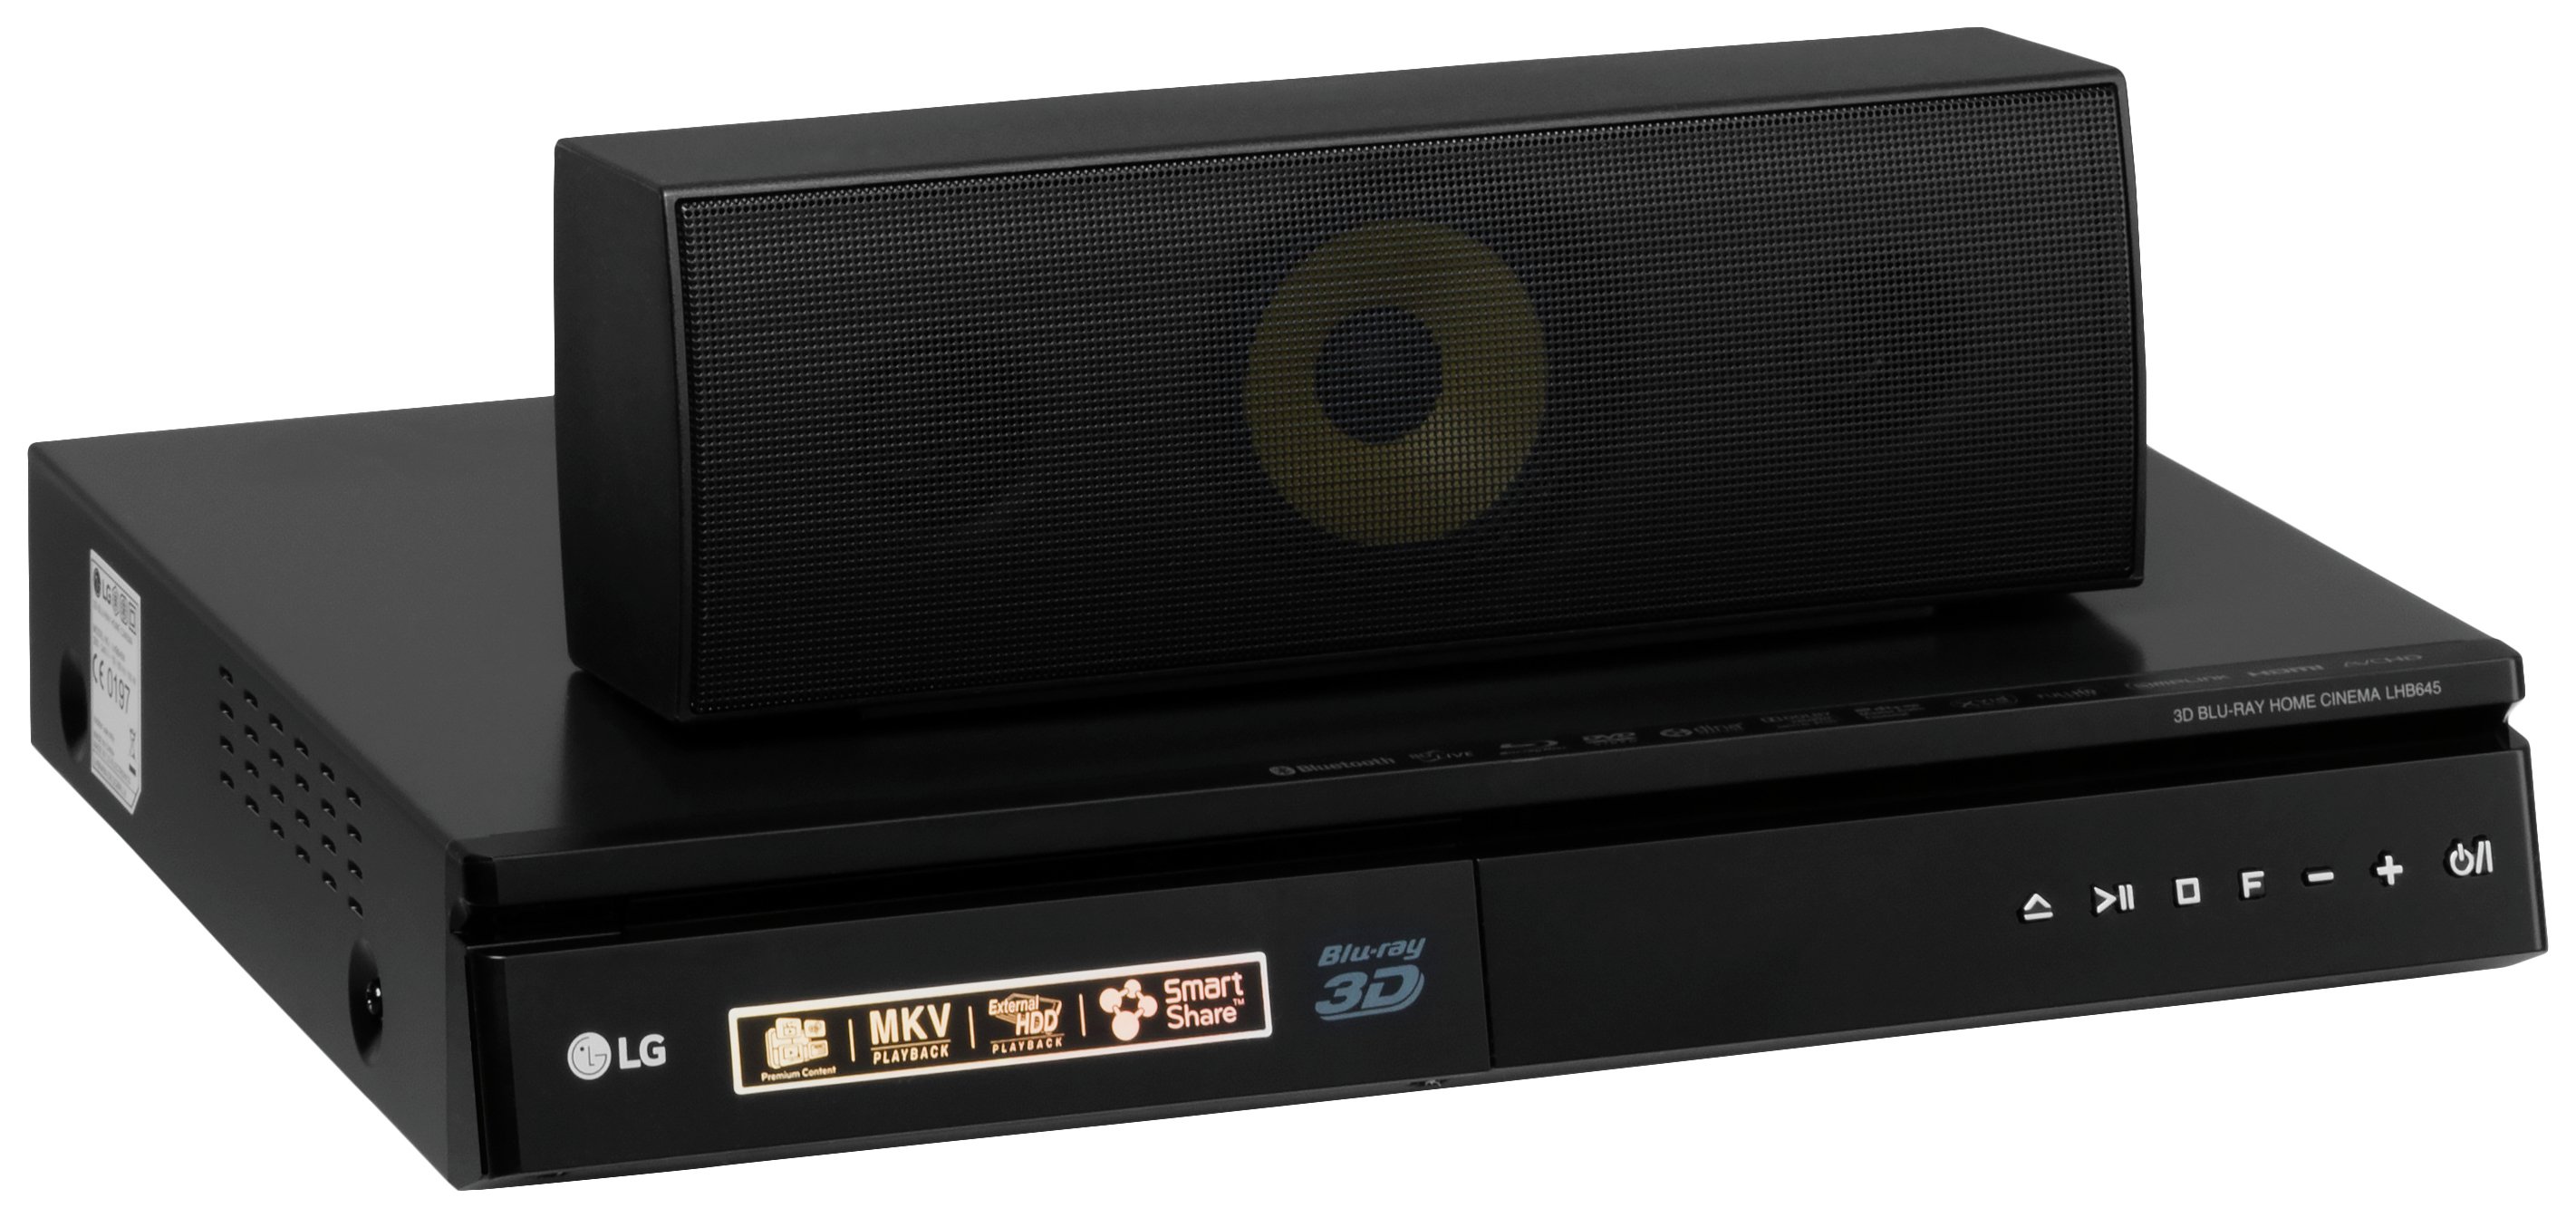 LG LHB645N 1000W 5.1Ch Blu- ray Home Cinema System Review